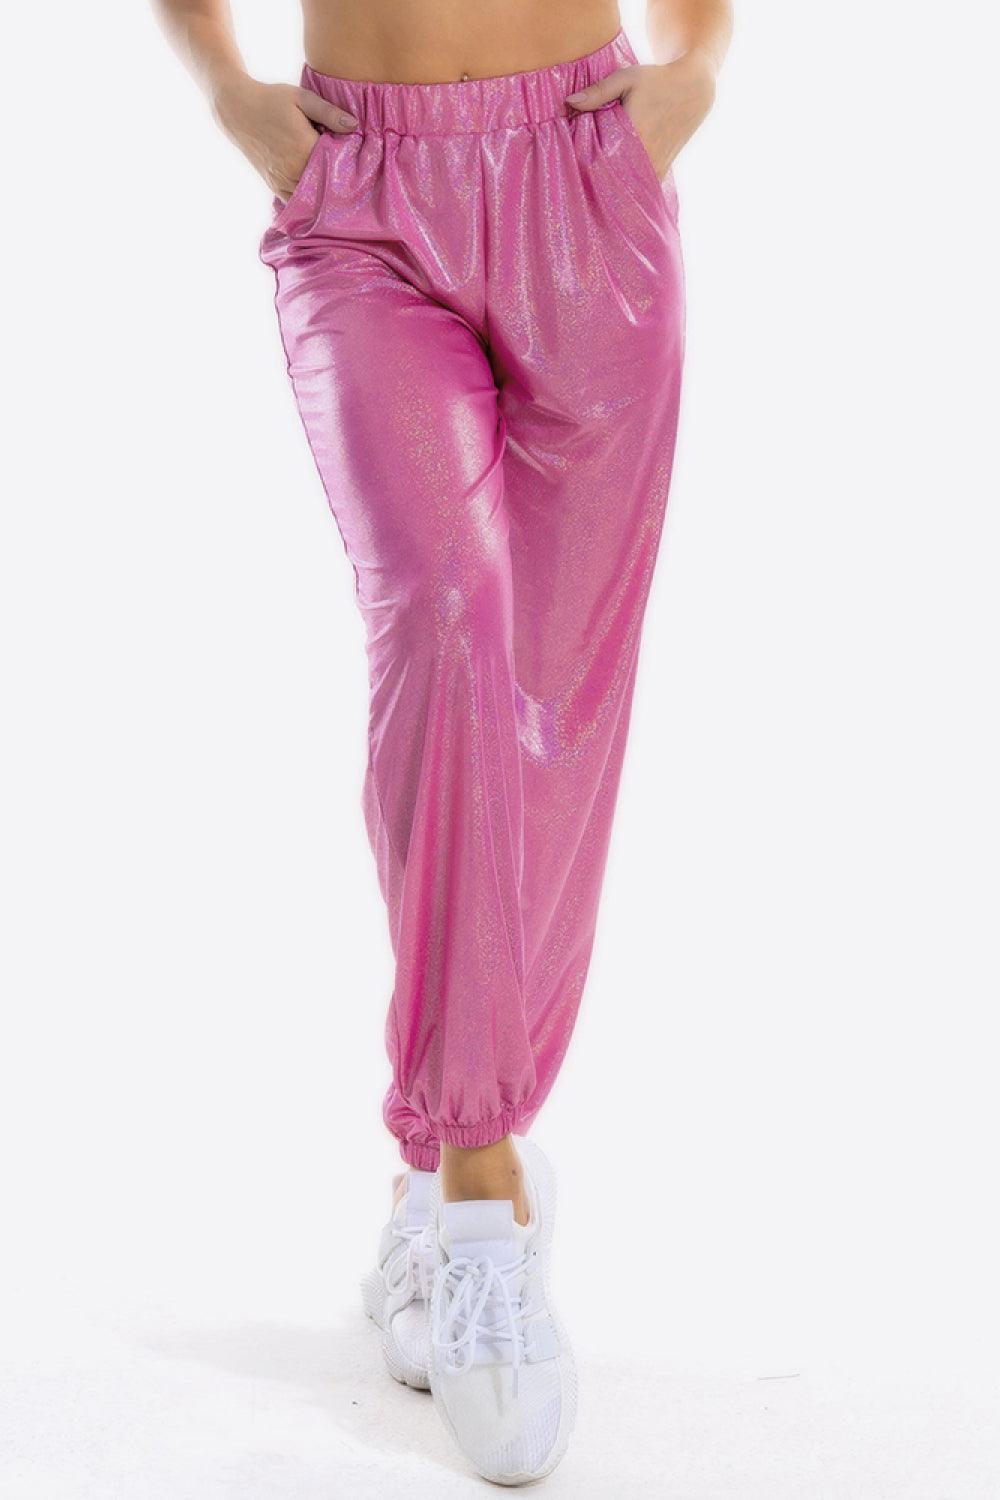 Glitter Elastic Waist Pants with Pockets - BELLATRENDZ